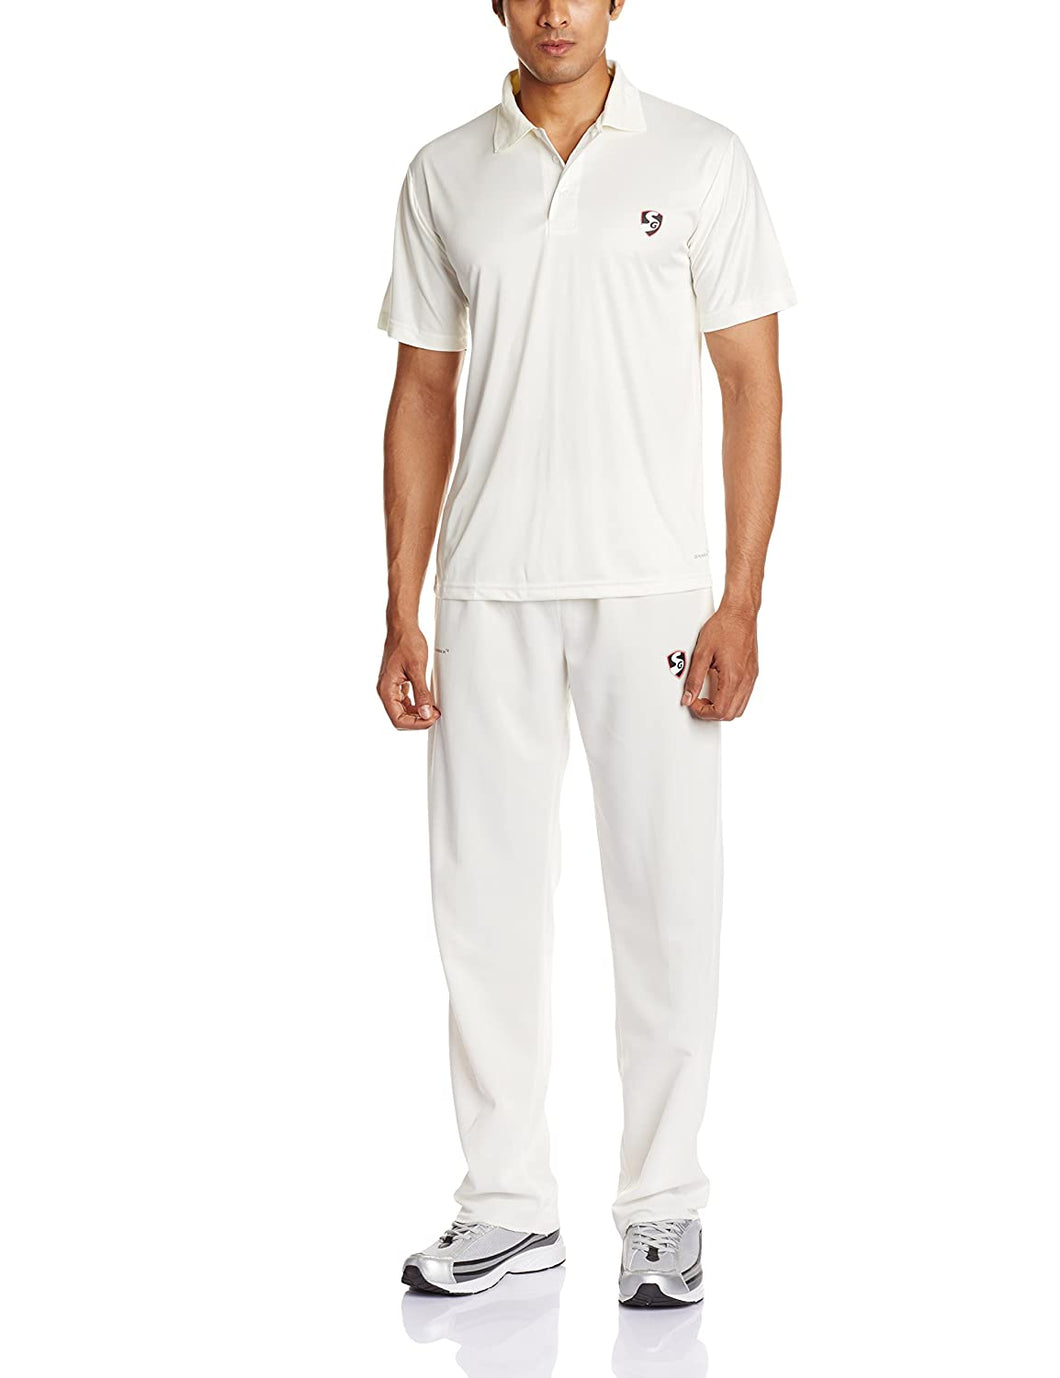 SG Club Cricket White Shirt Pant Set Uniform